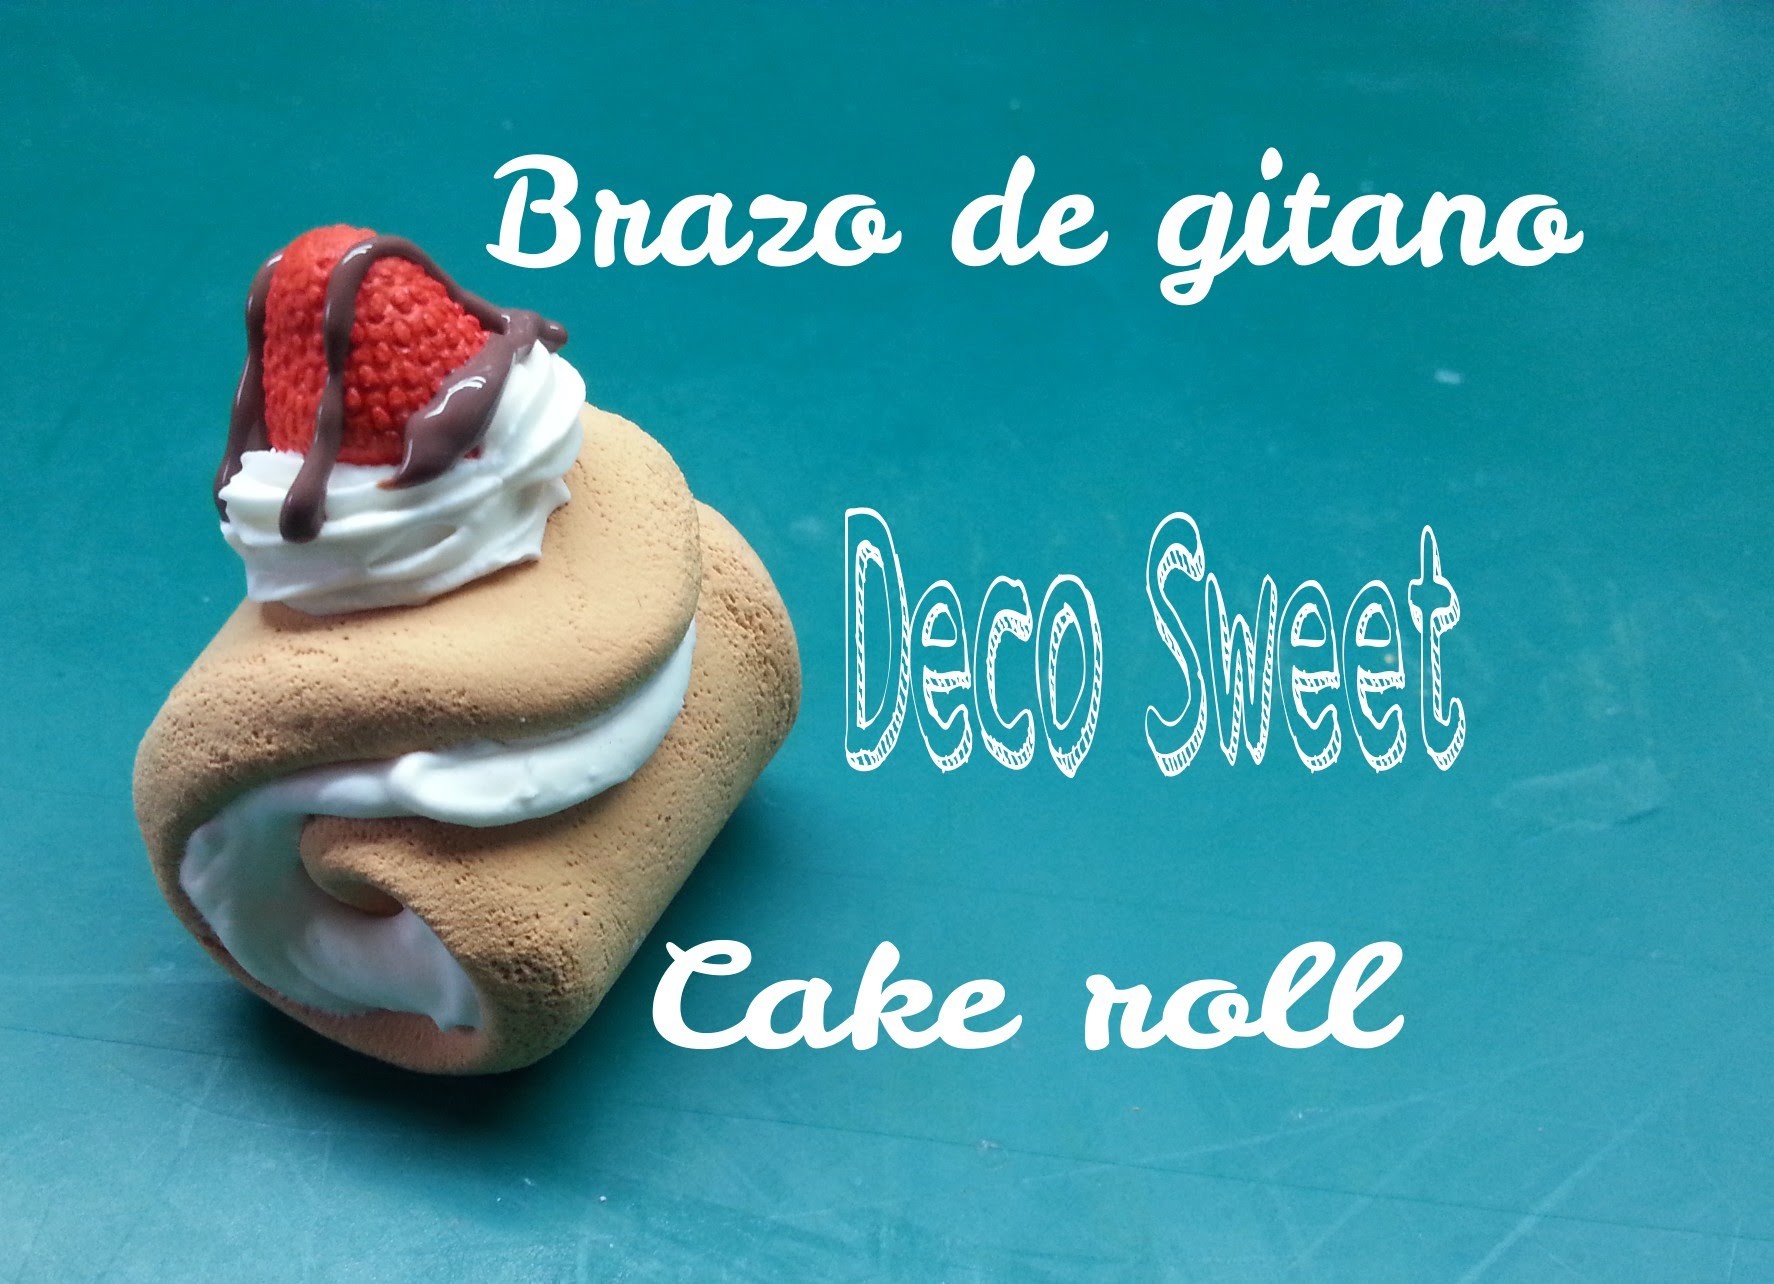 DIY Deco Sweets Brazo de gitano - Sweets Deco cake roll air dry clay